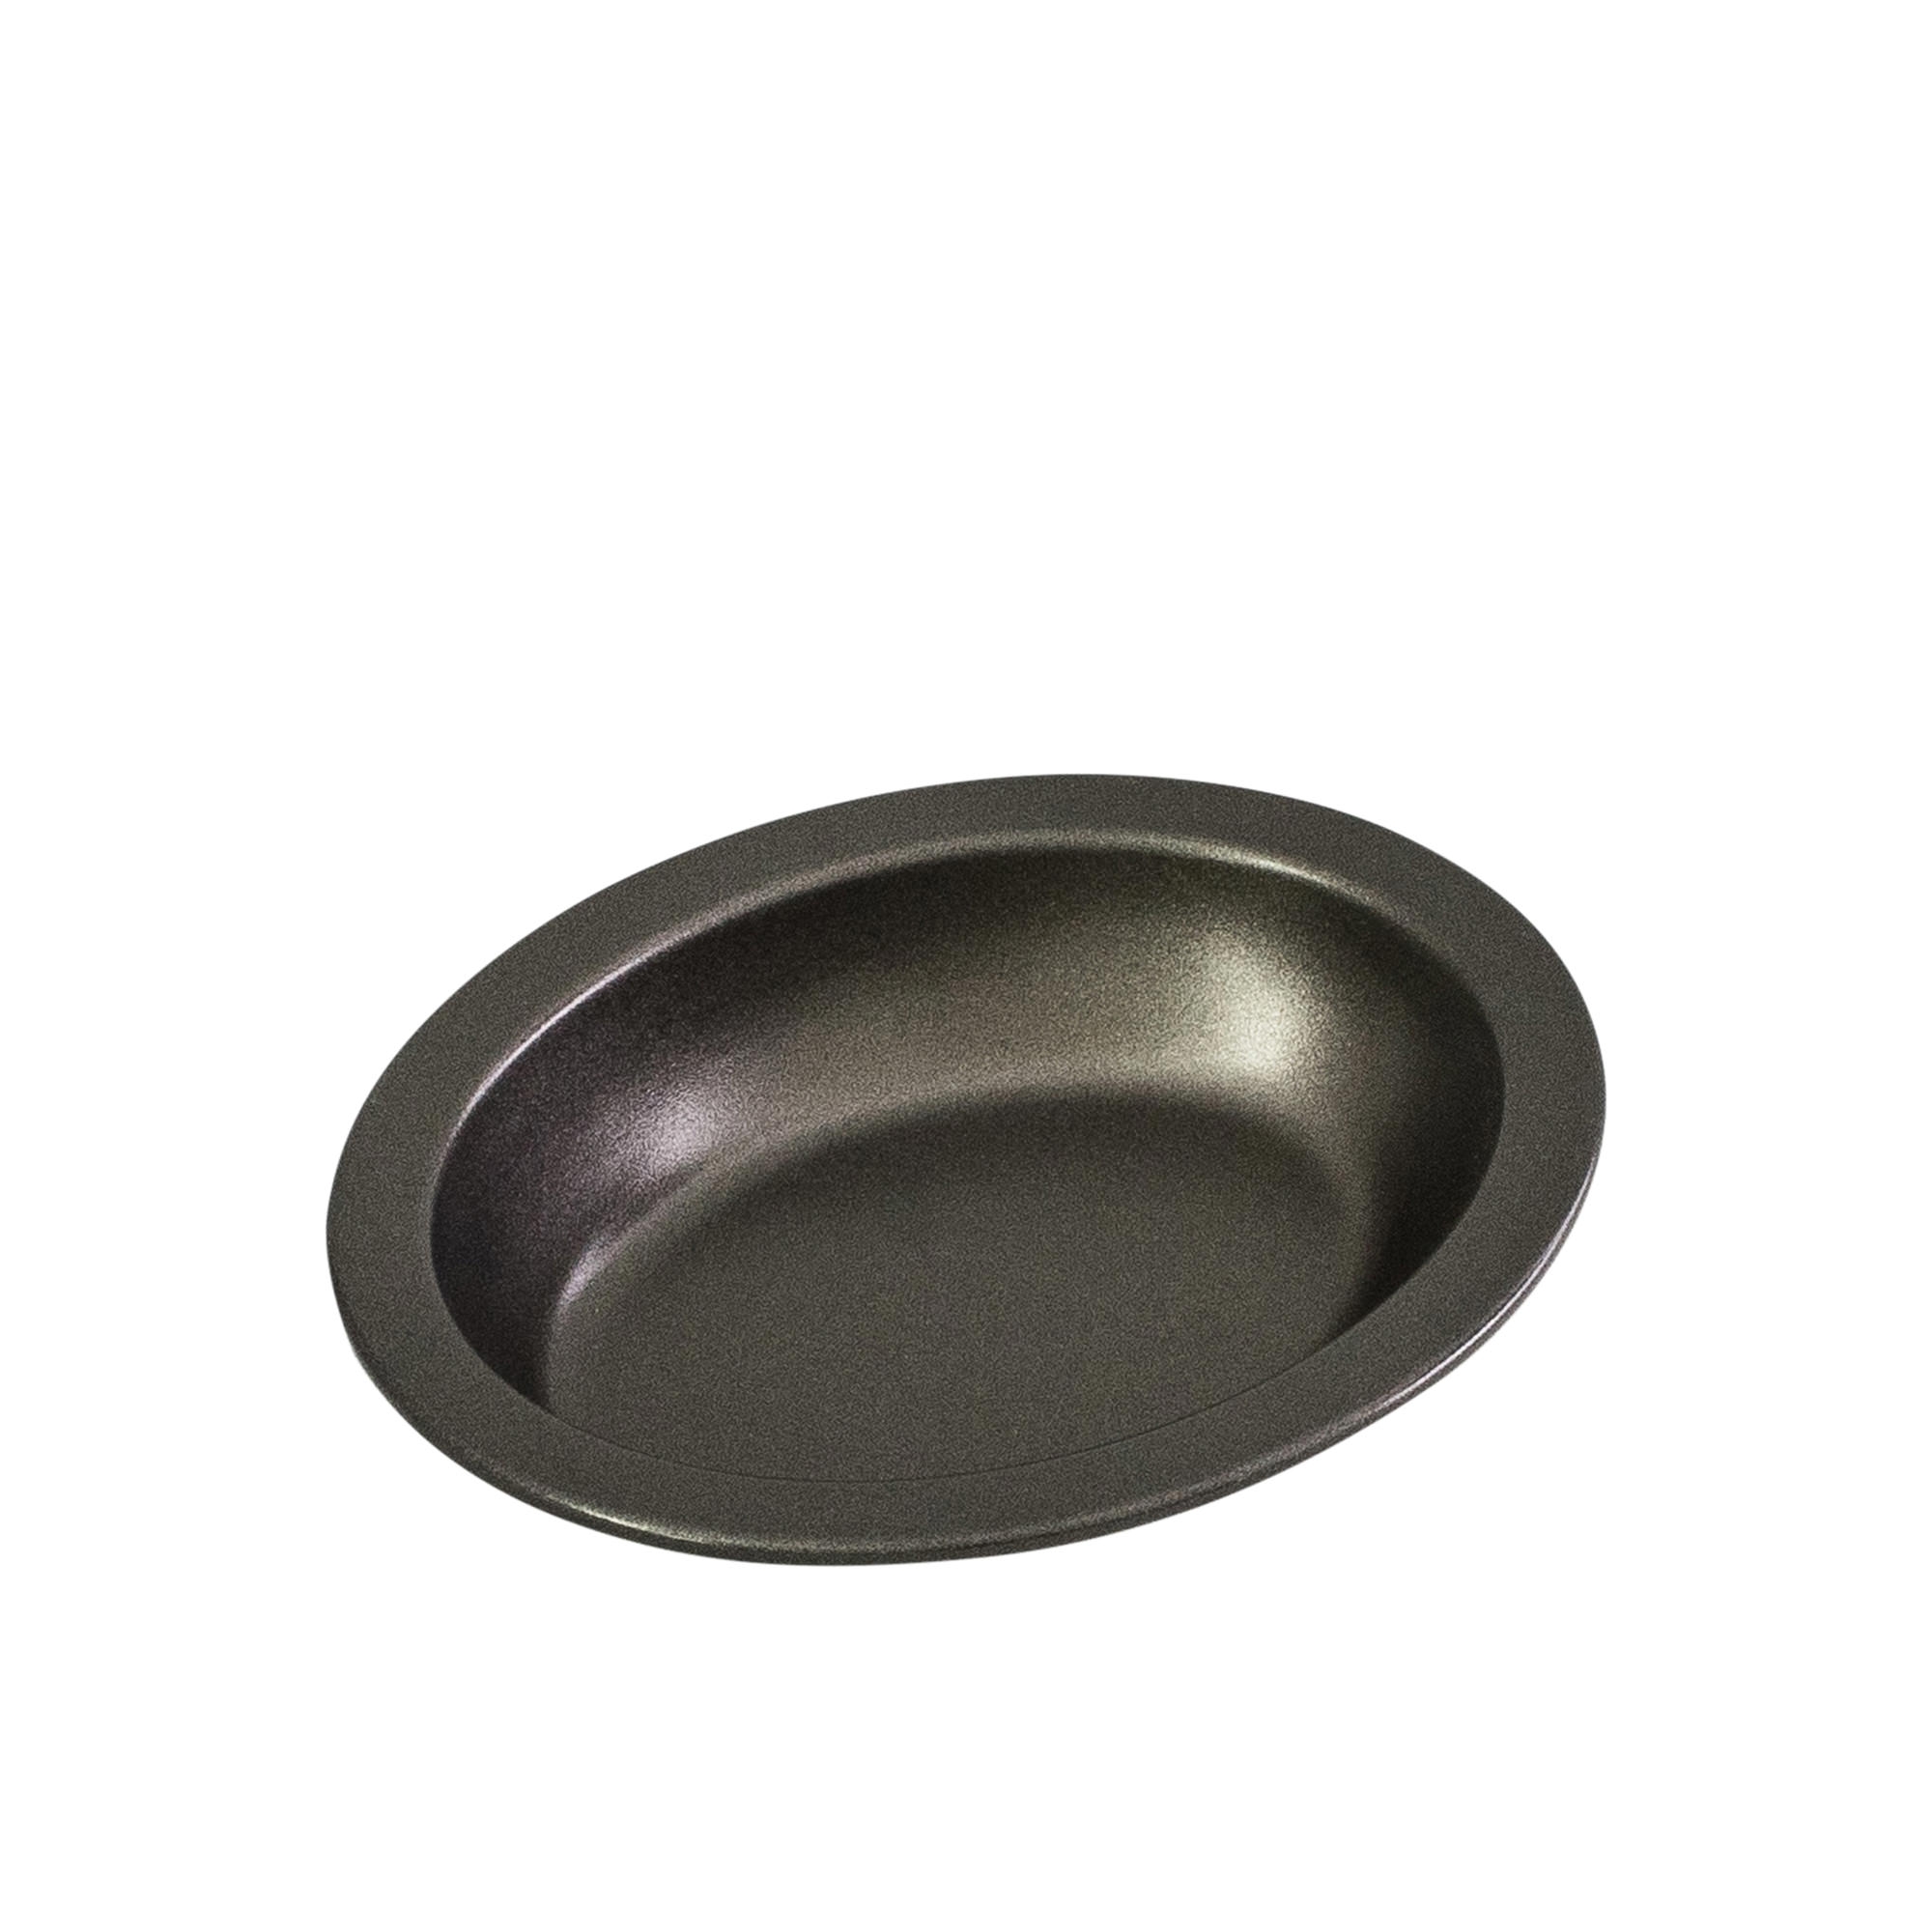 Bakemaster Non Stick Individual Oval Pie Dish 13.5x10cm Image 1